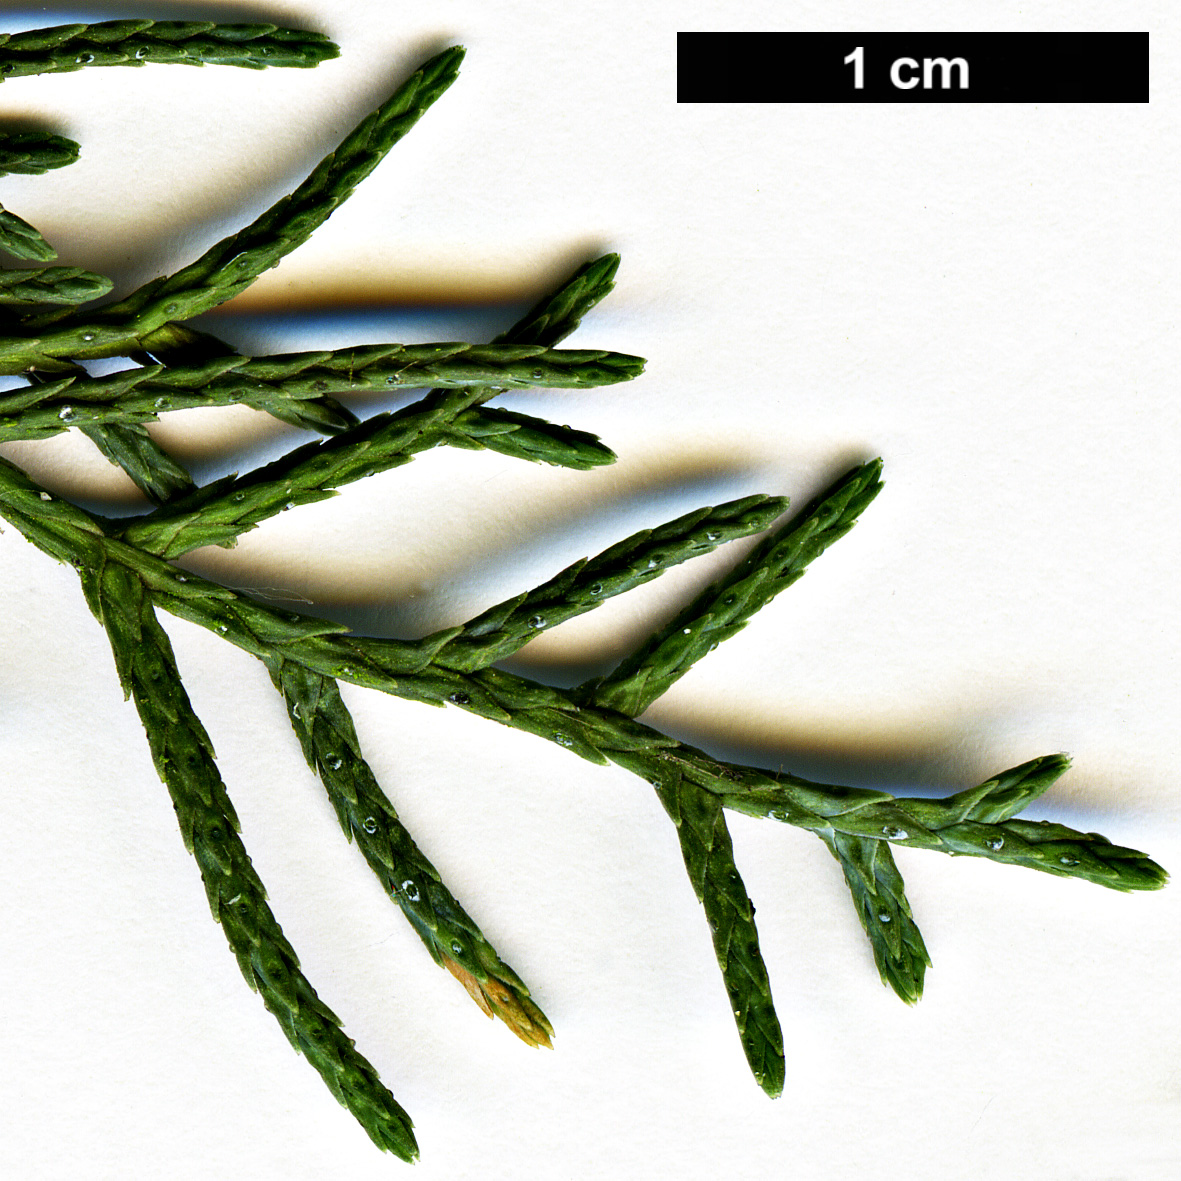 High resolution image: Family: Cupressaceae - Genus: Cupressus - Taxon: arizonica - SpeciesSub: var. glabra